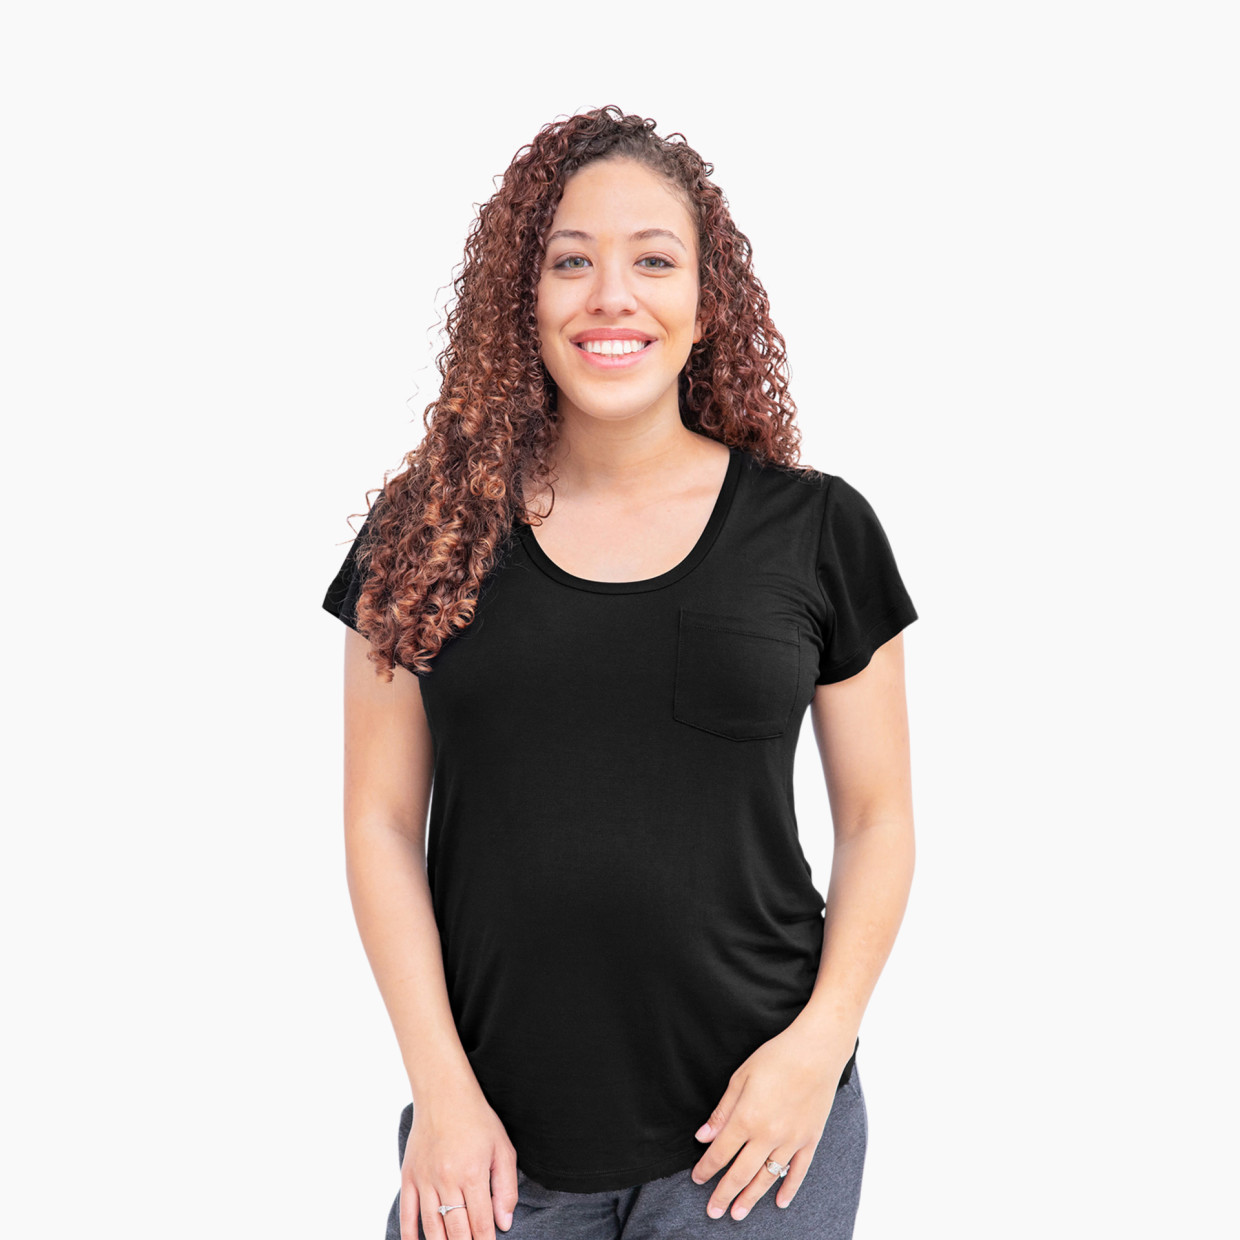 Kindred Bravely Everyday Nursing & Maternity T-Shirt - Black, Medium.